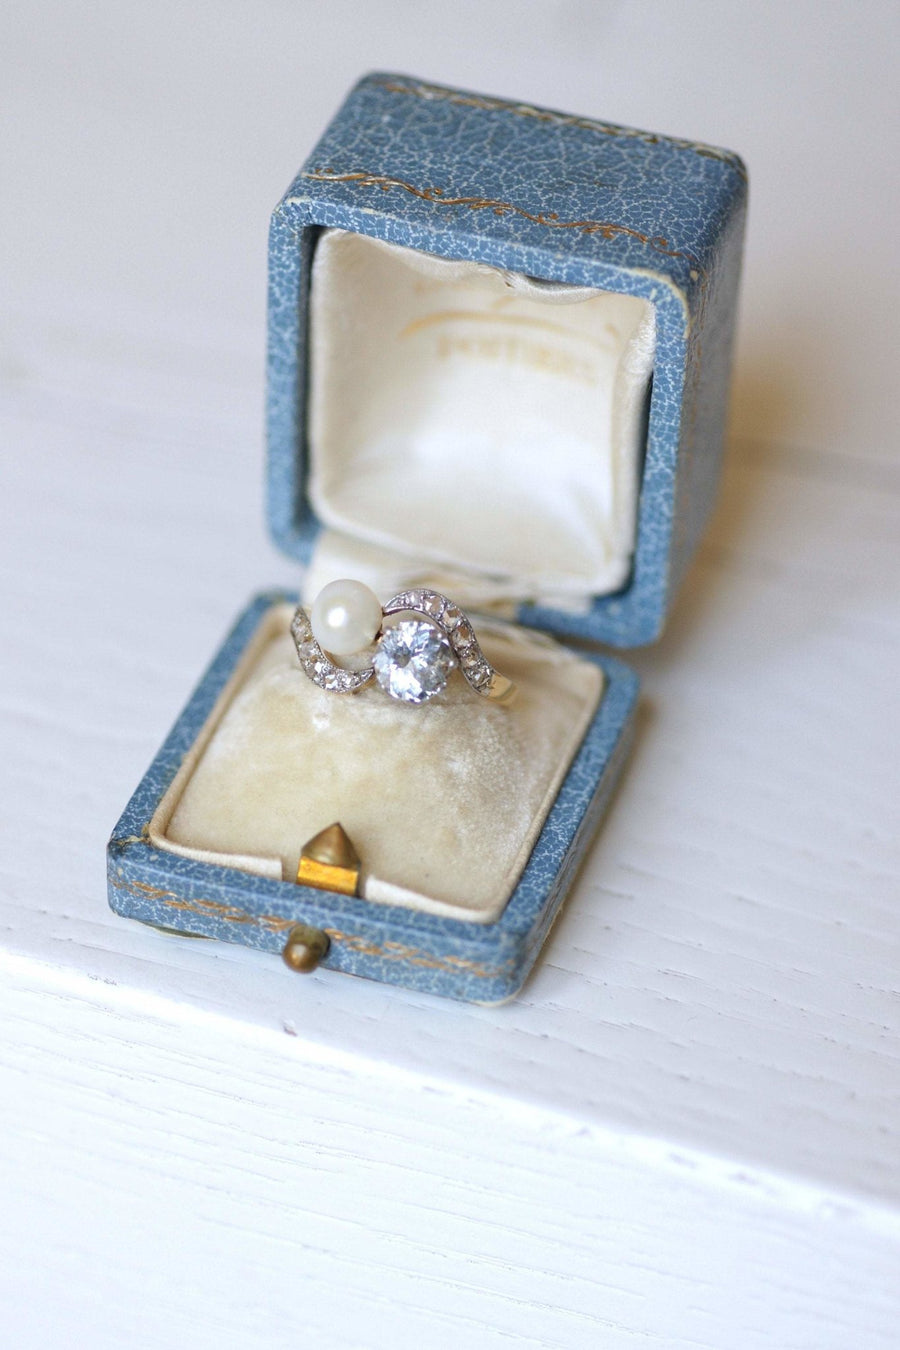 Antique aquamarine, pearl and diamond ring - Penelope Gallery